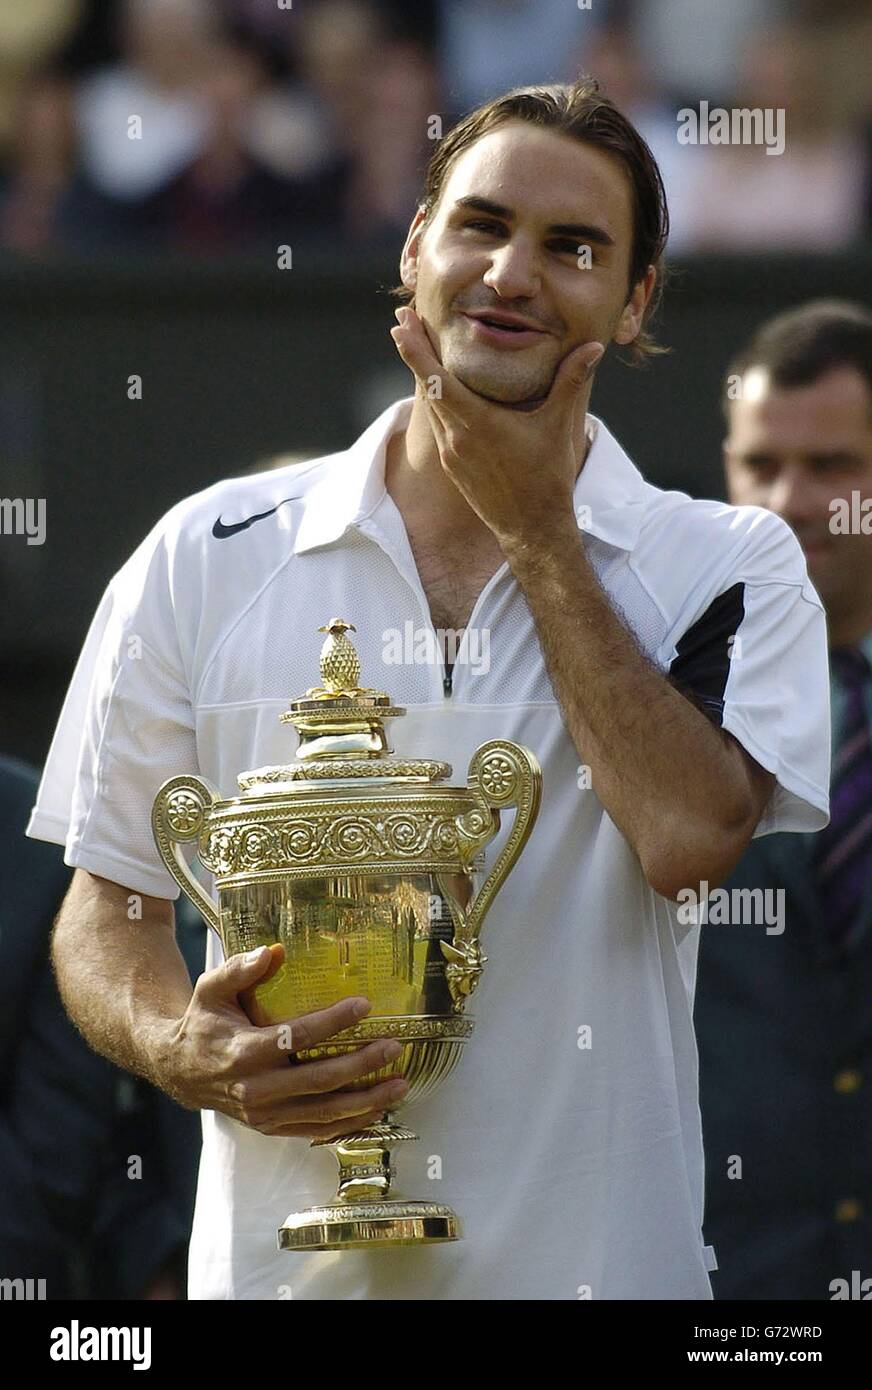 Roger Federer v Andy Roddick Wimbledon Final Stock Photo - Alamy